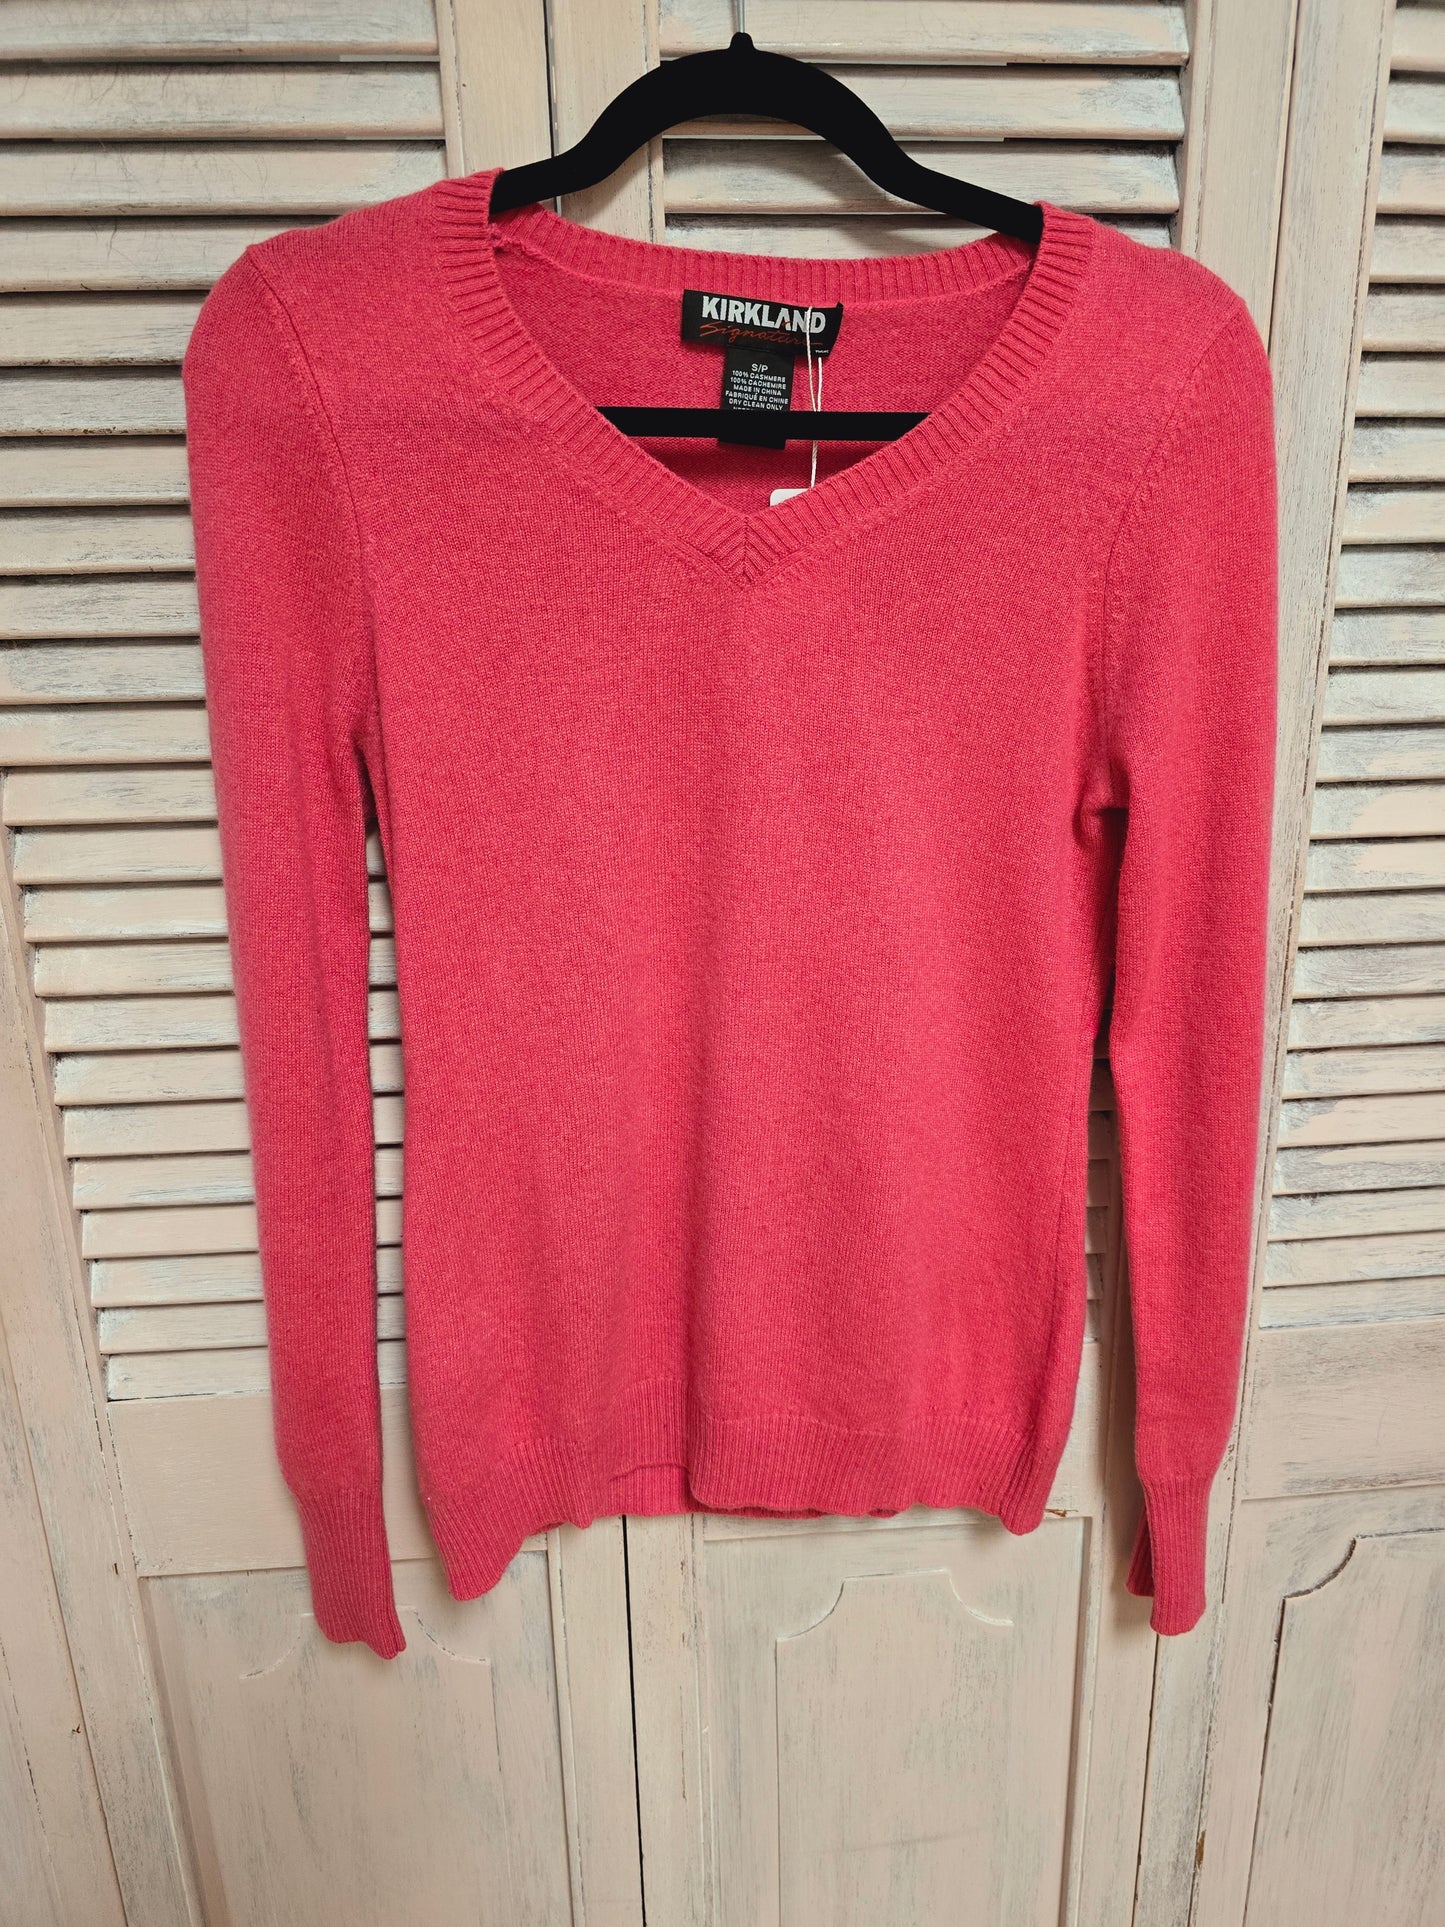 Kirkland Cashmere Sweater